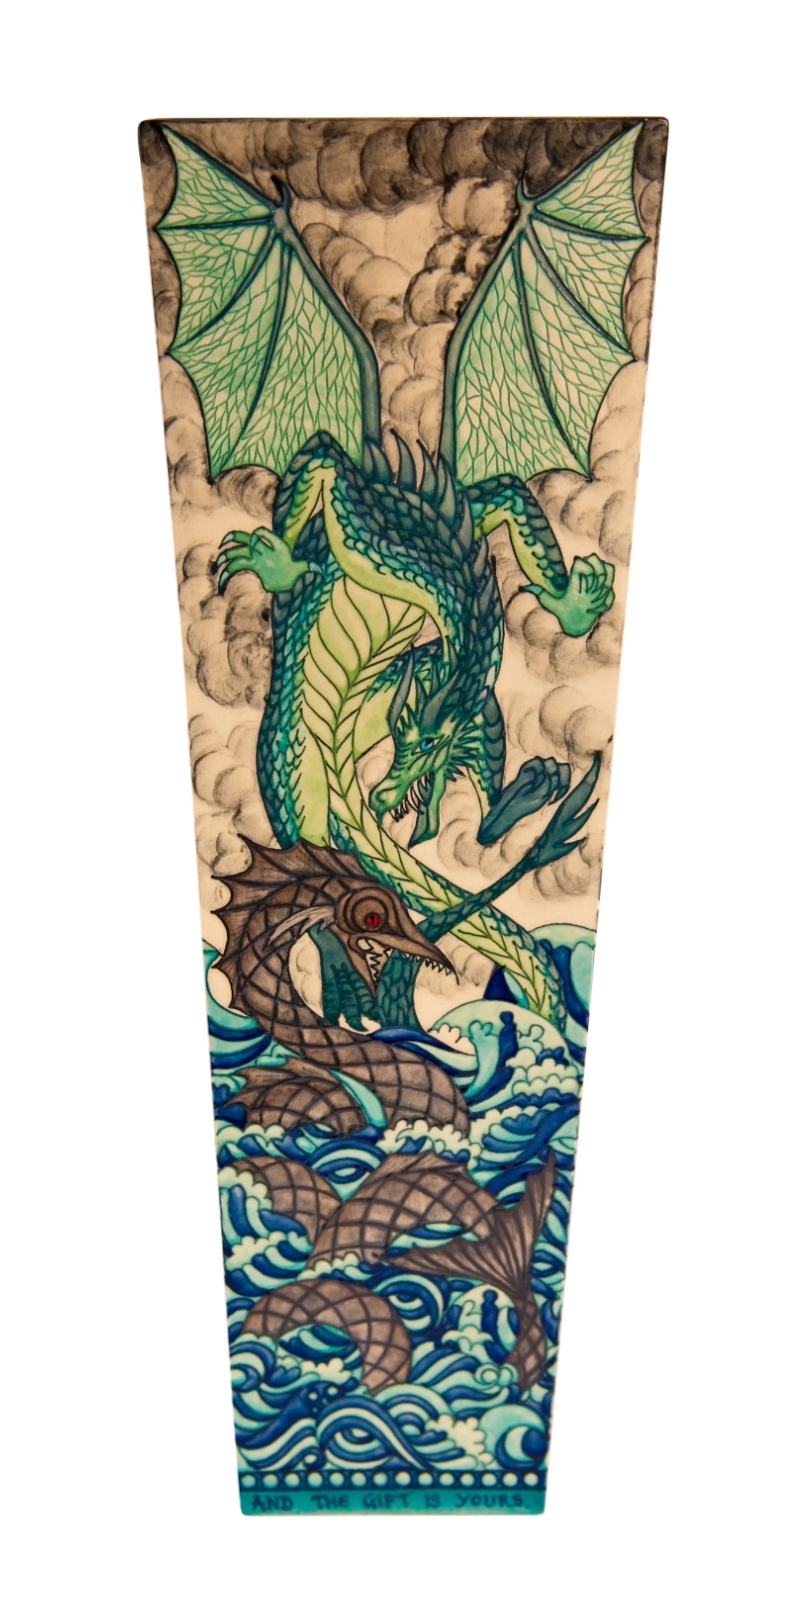 HW designs_Battling Dragon and Sea Serpent_Enlarged